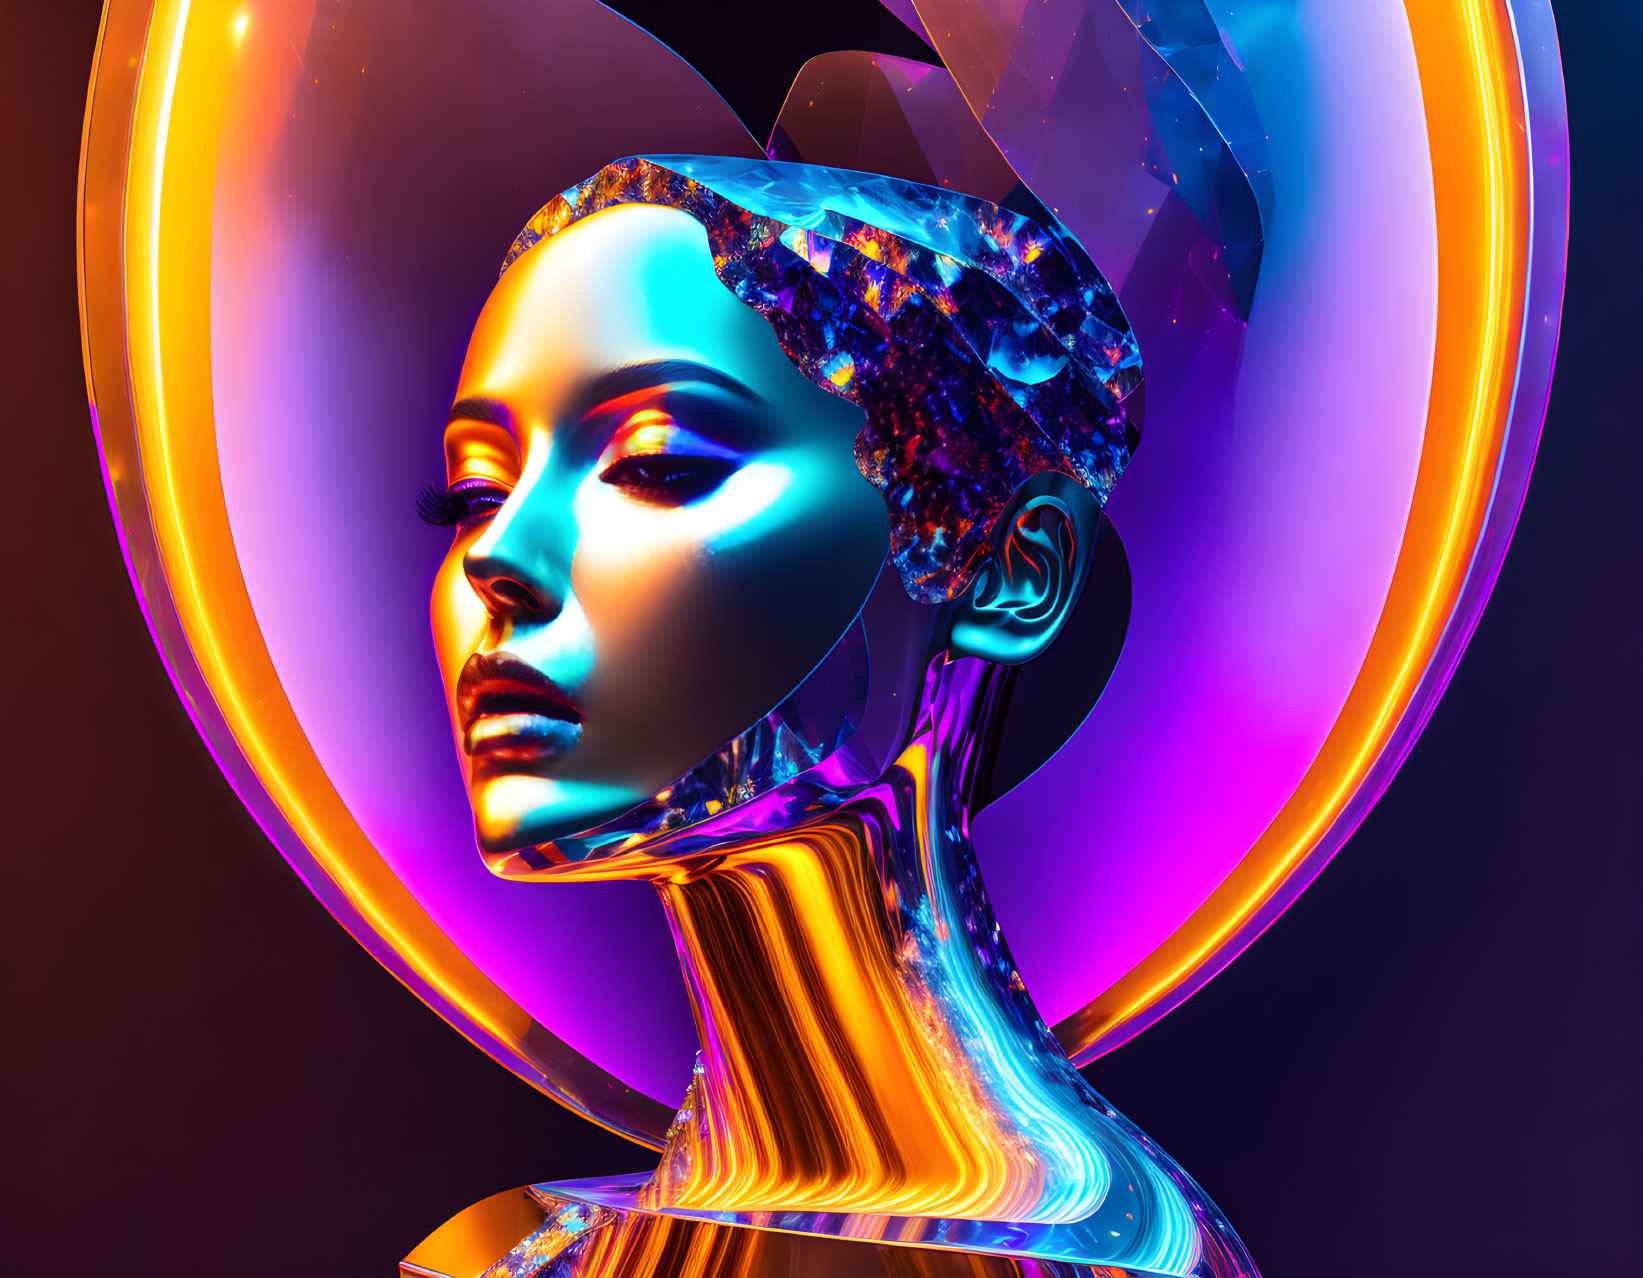 Futuristic digital art: Vibrant woman with crystalline head in neon rings